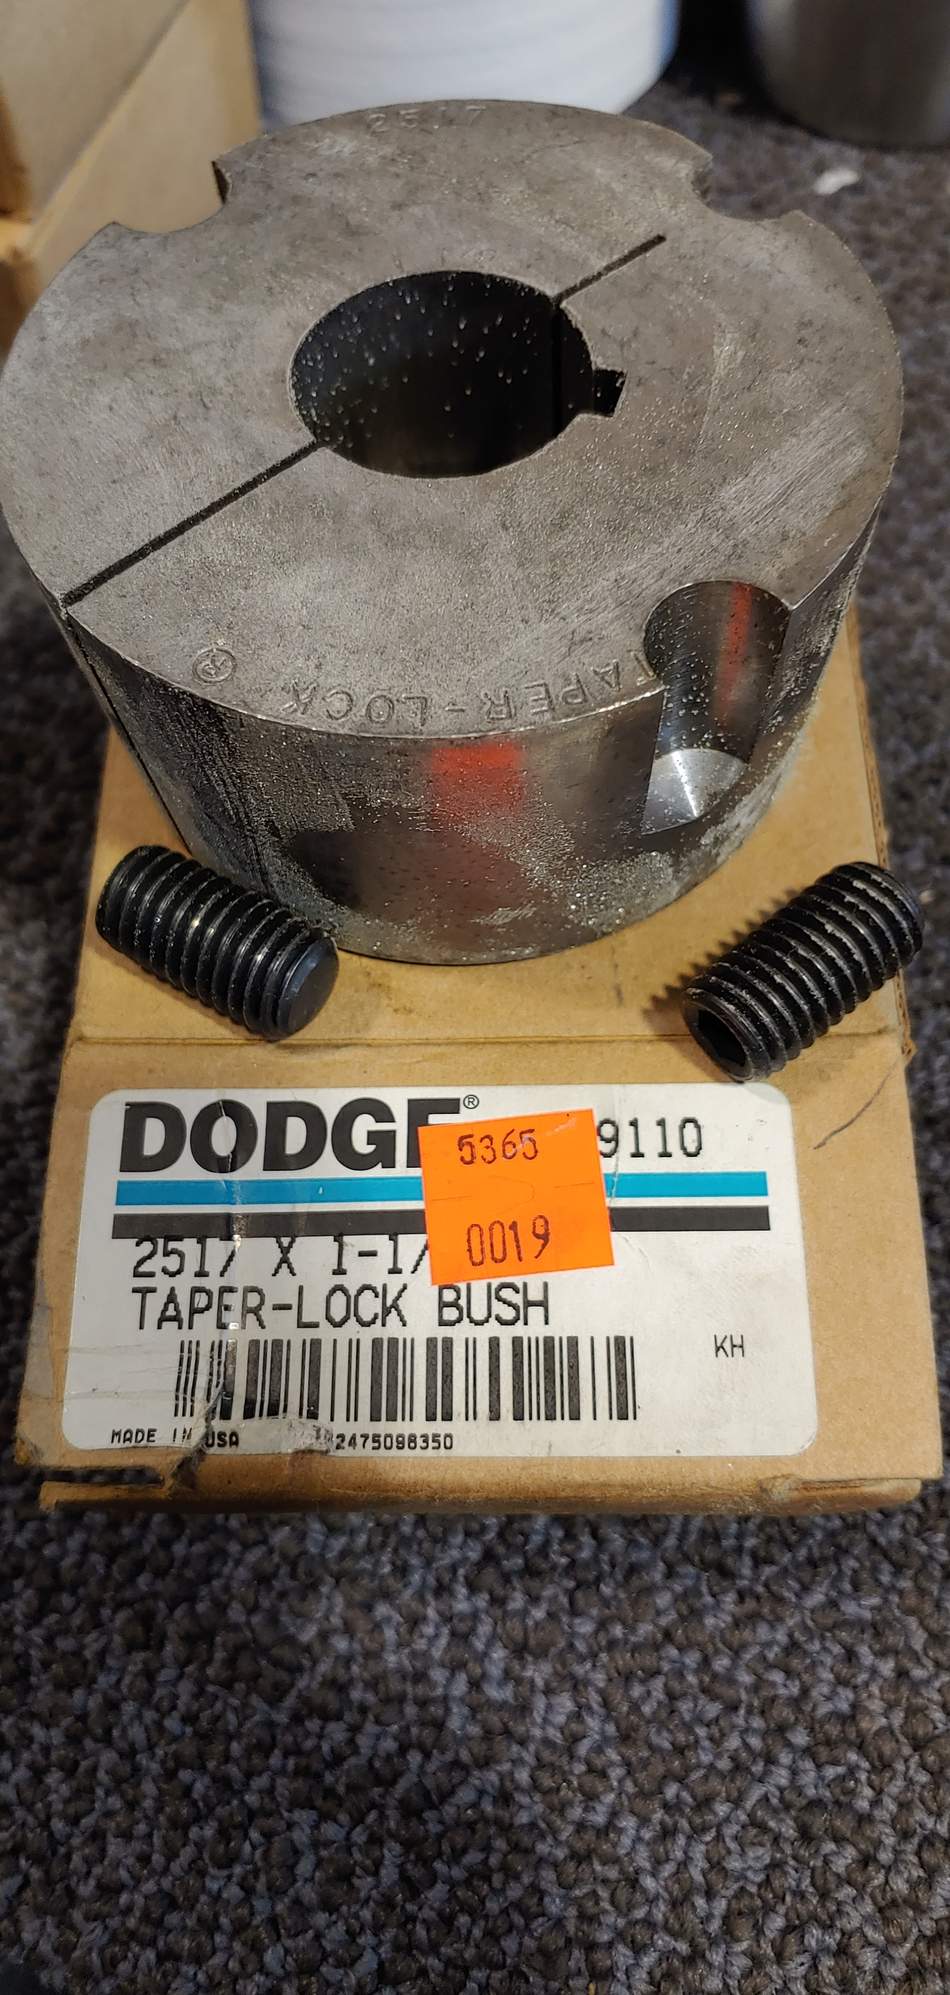 Dodge 119110 Taper-Lock Bushing - 2517 Series, 1.1250 in Bore, Finished with Keyway, 1/4 x 1/8 in Keyway, Sintered Steel